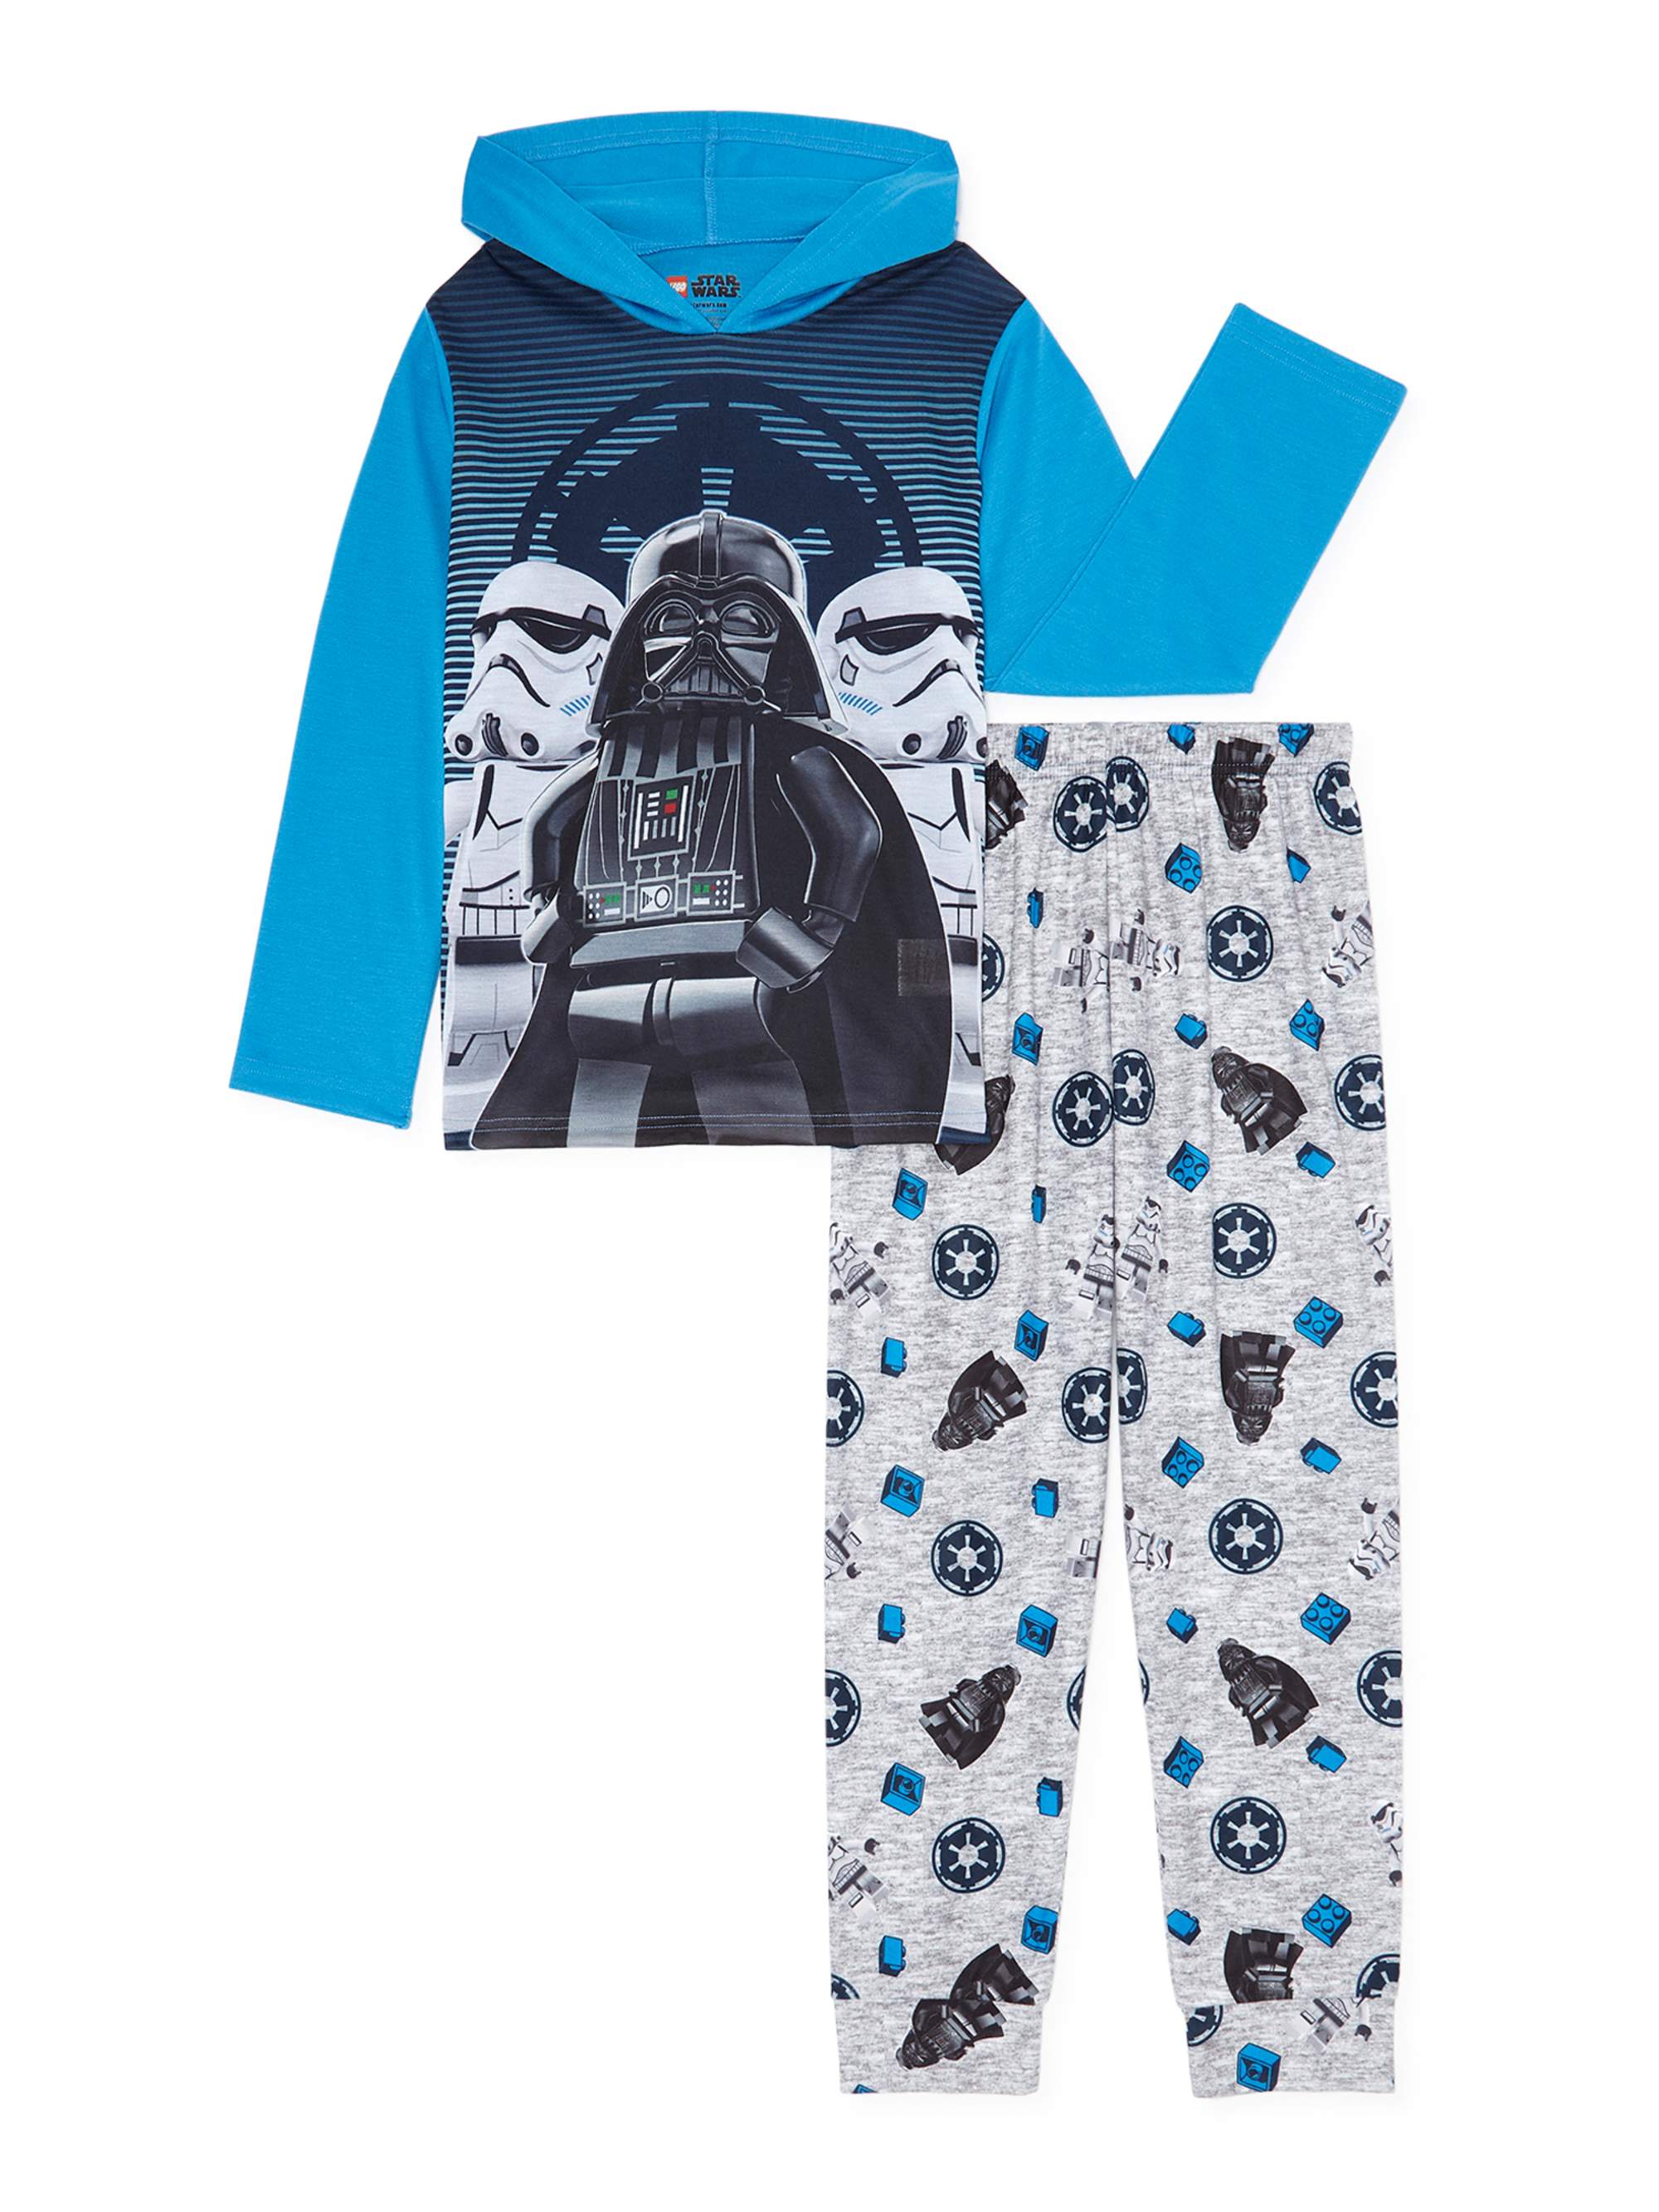 LEGO Star Wars Boys Robe with Slippers,Darth Vader Bathrobe Pajama Set,Boys Size 4//5 to 10//12